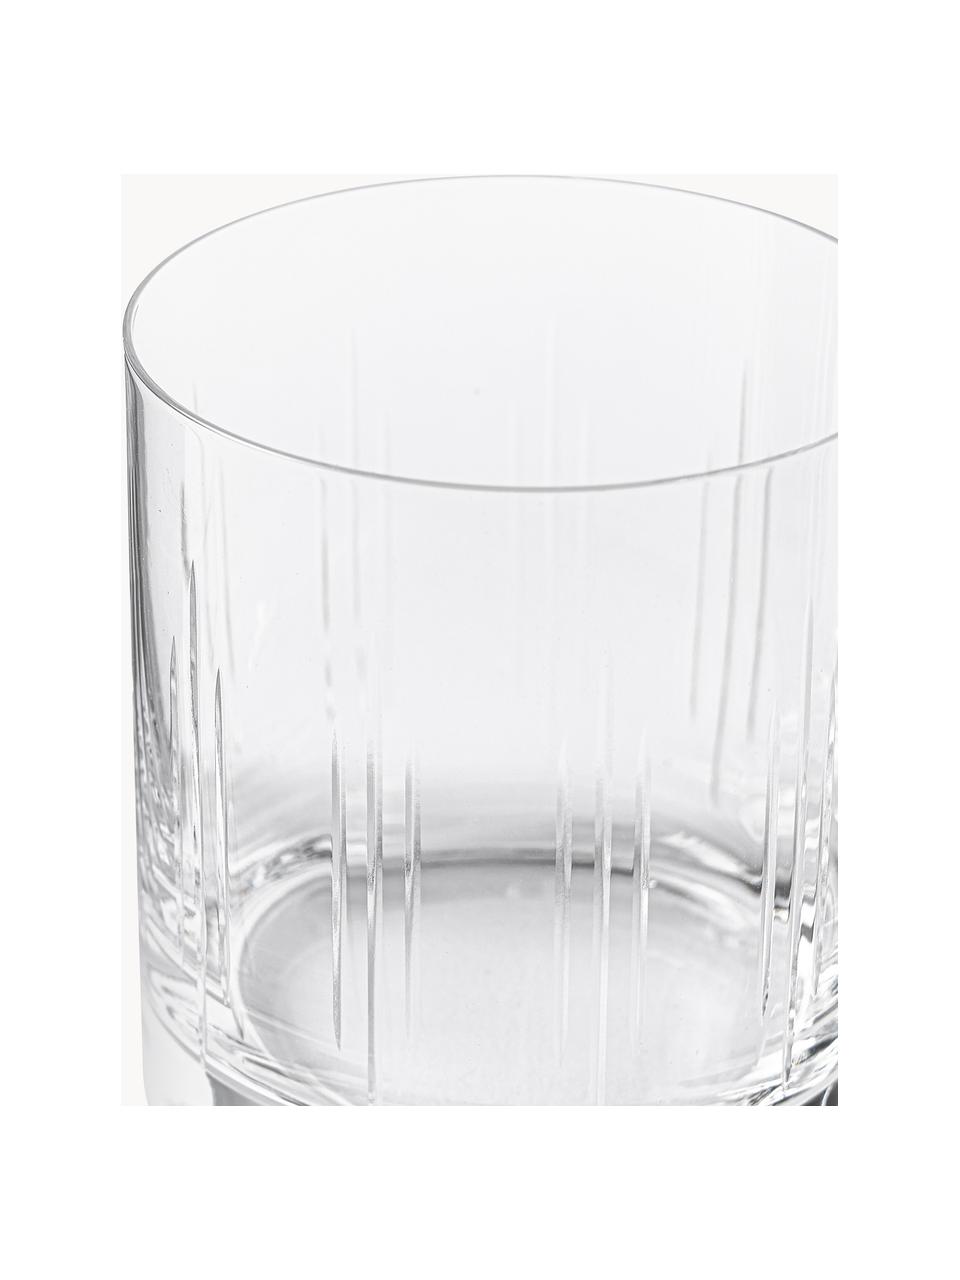 Bicchieri in cristallo Felipe 4 pz, Cristallo, Trasparente, Ø 8 x Alt. 9 cm, 280 ml